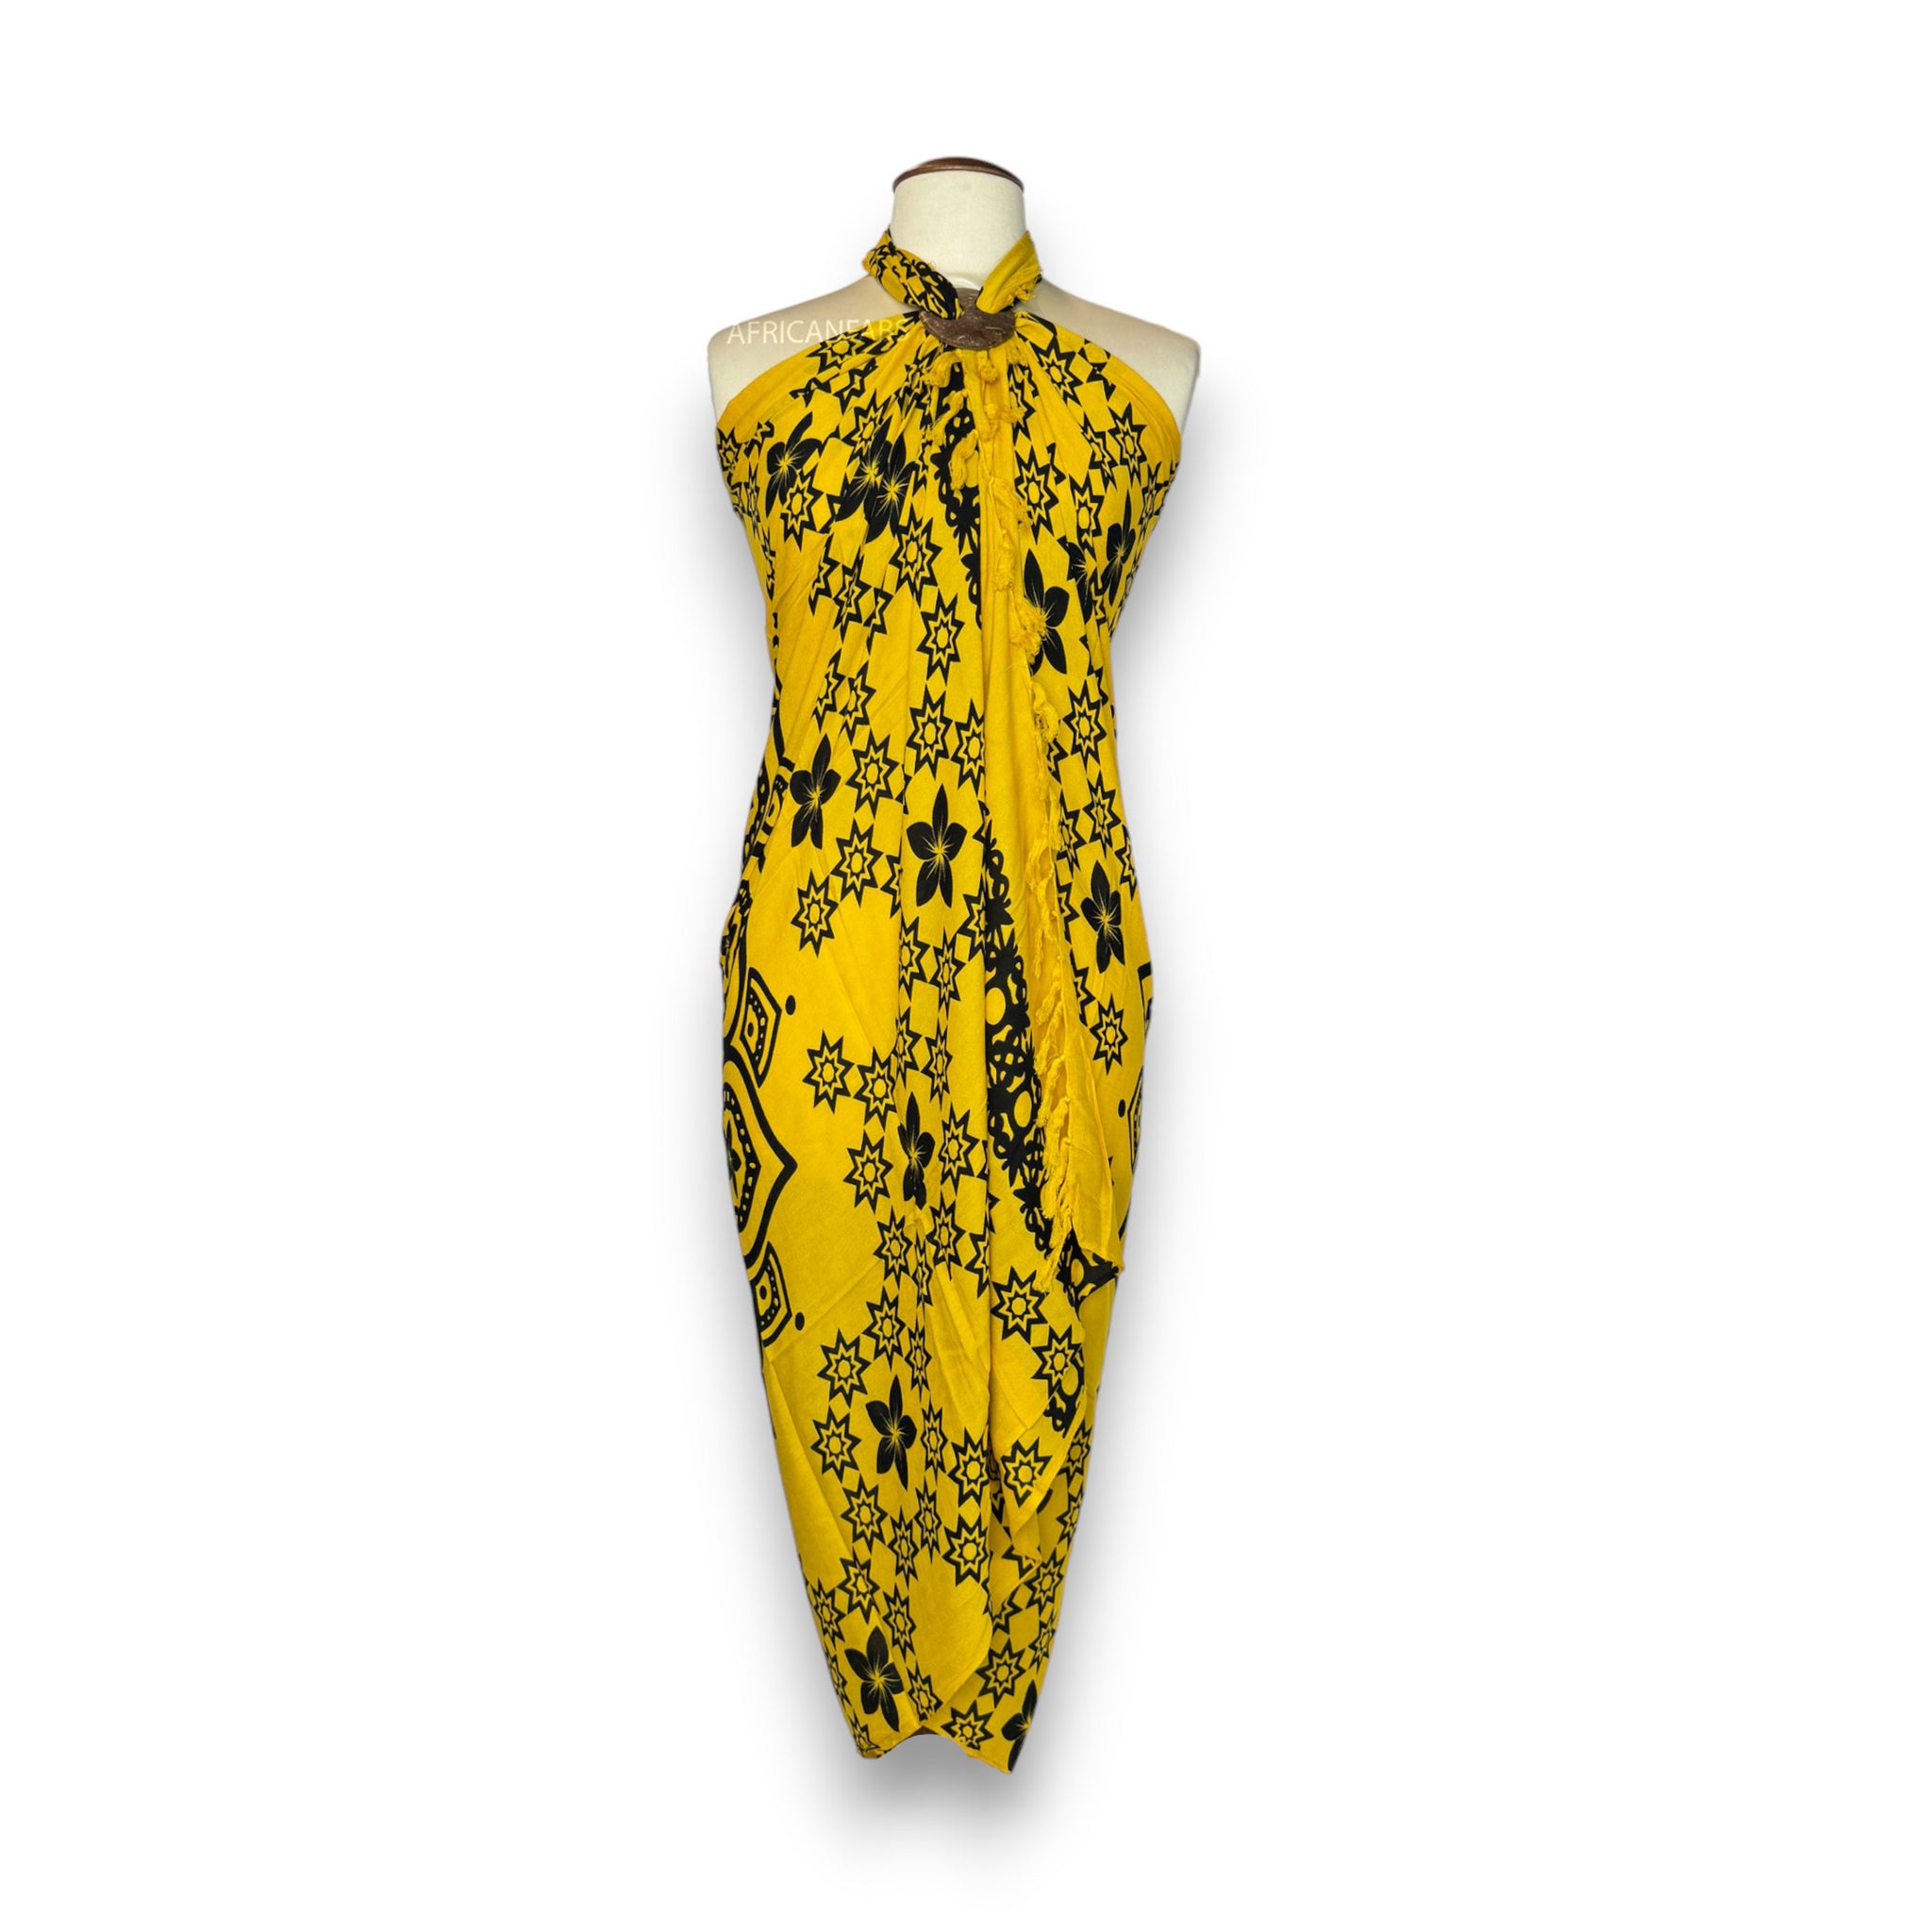 Sarong / pareo - Strandkleding wikkelrok - Mandala geel / zwart